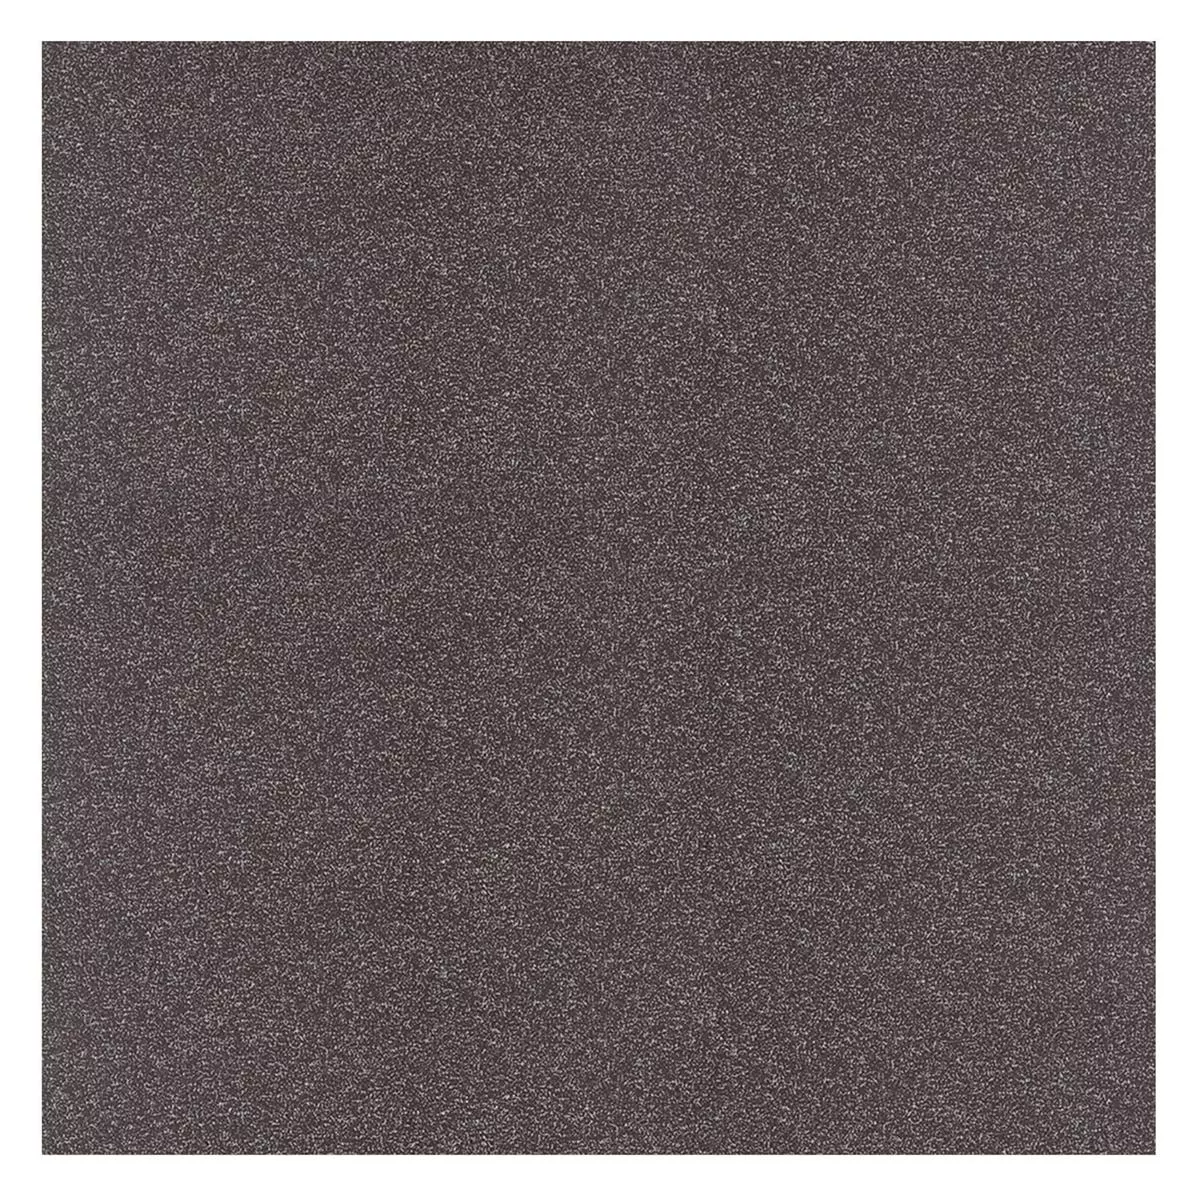 Sample Floor Tiles Courage Fine Grain R10/A Anthracite 20x20cm